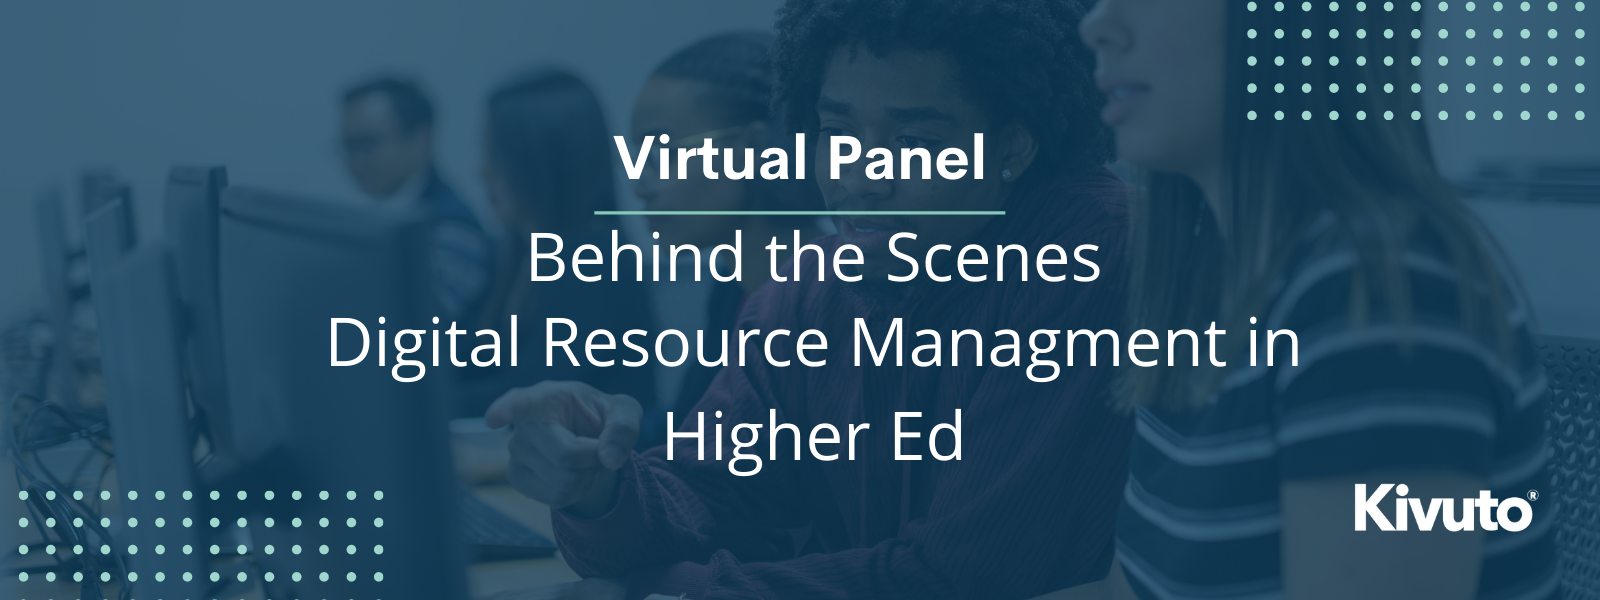 Digital Resource Management in Higher Ed | virtual panel banner